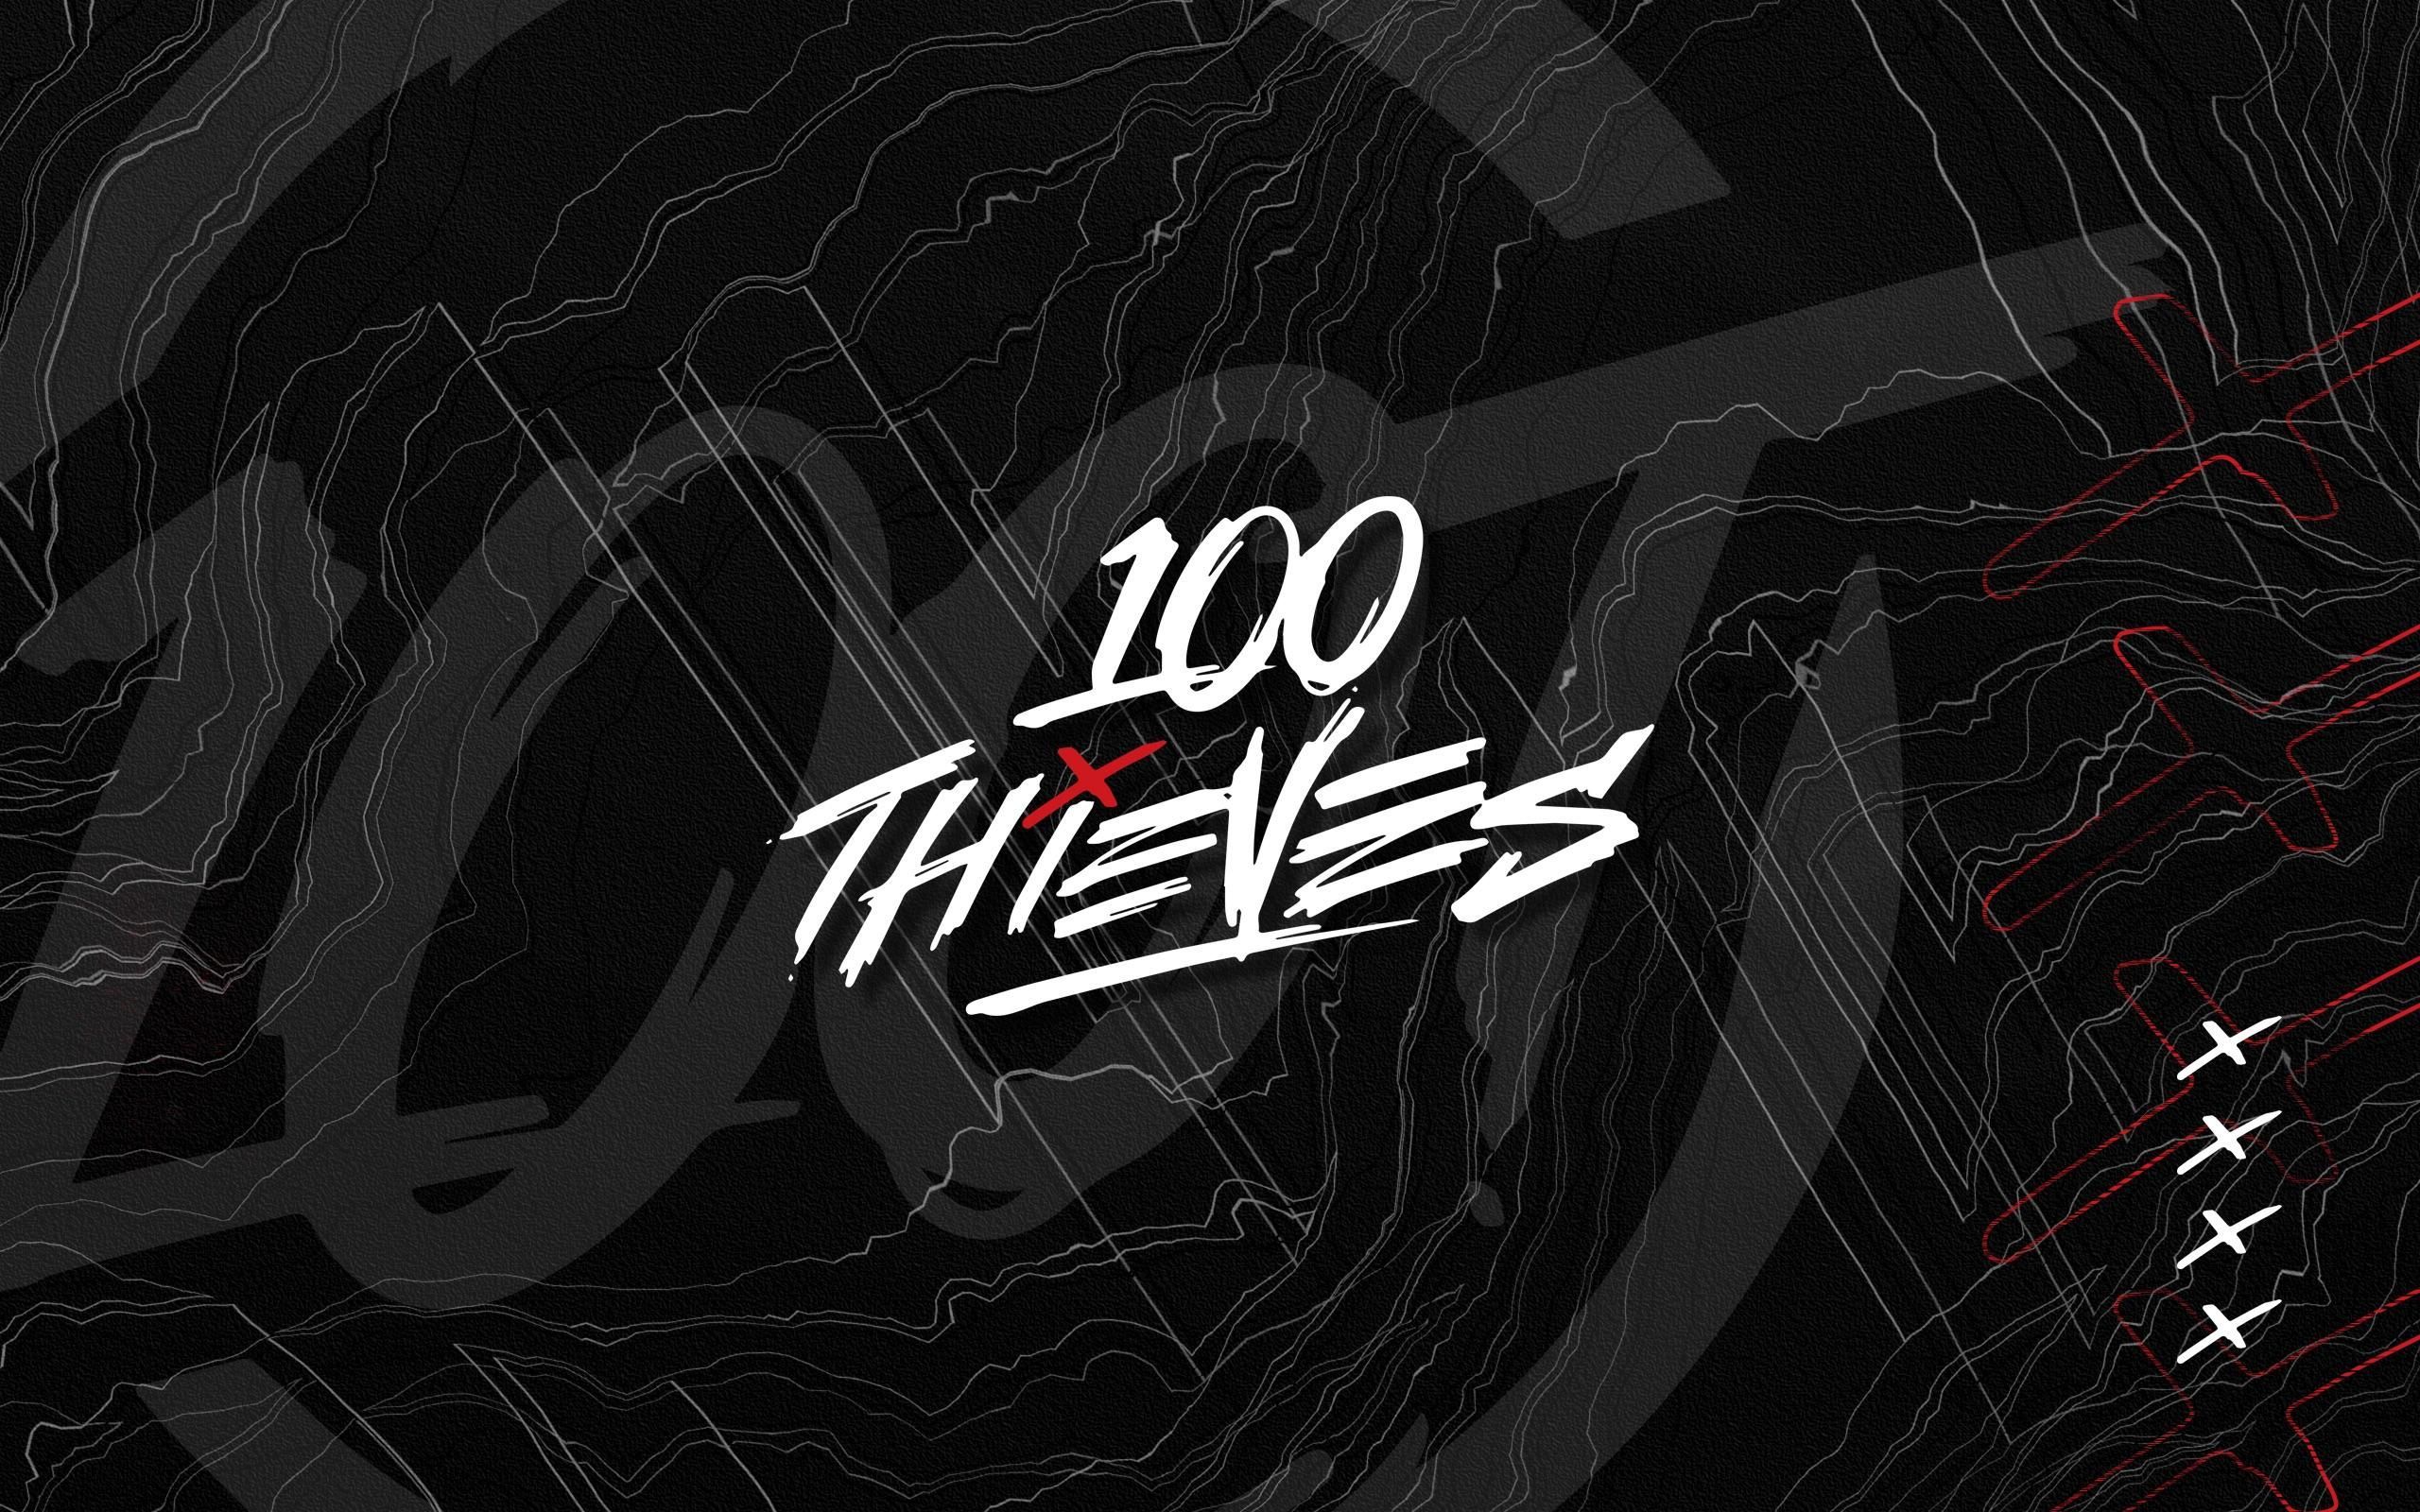 100 thieves. The originals, The 100